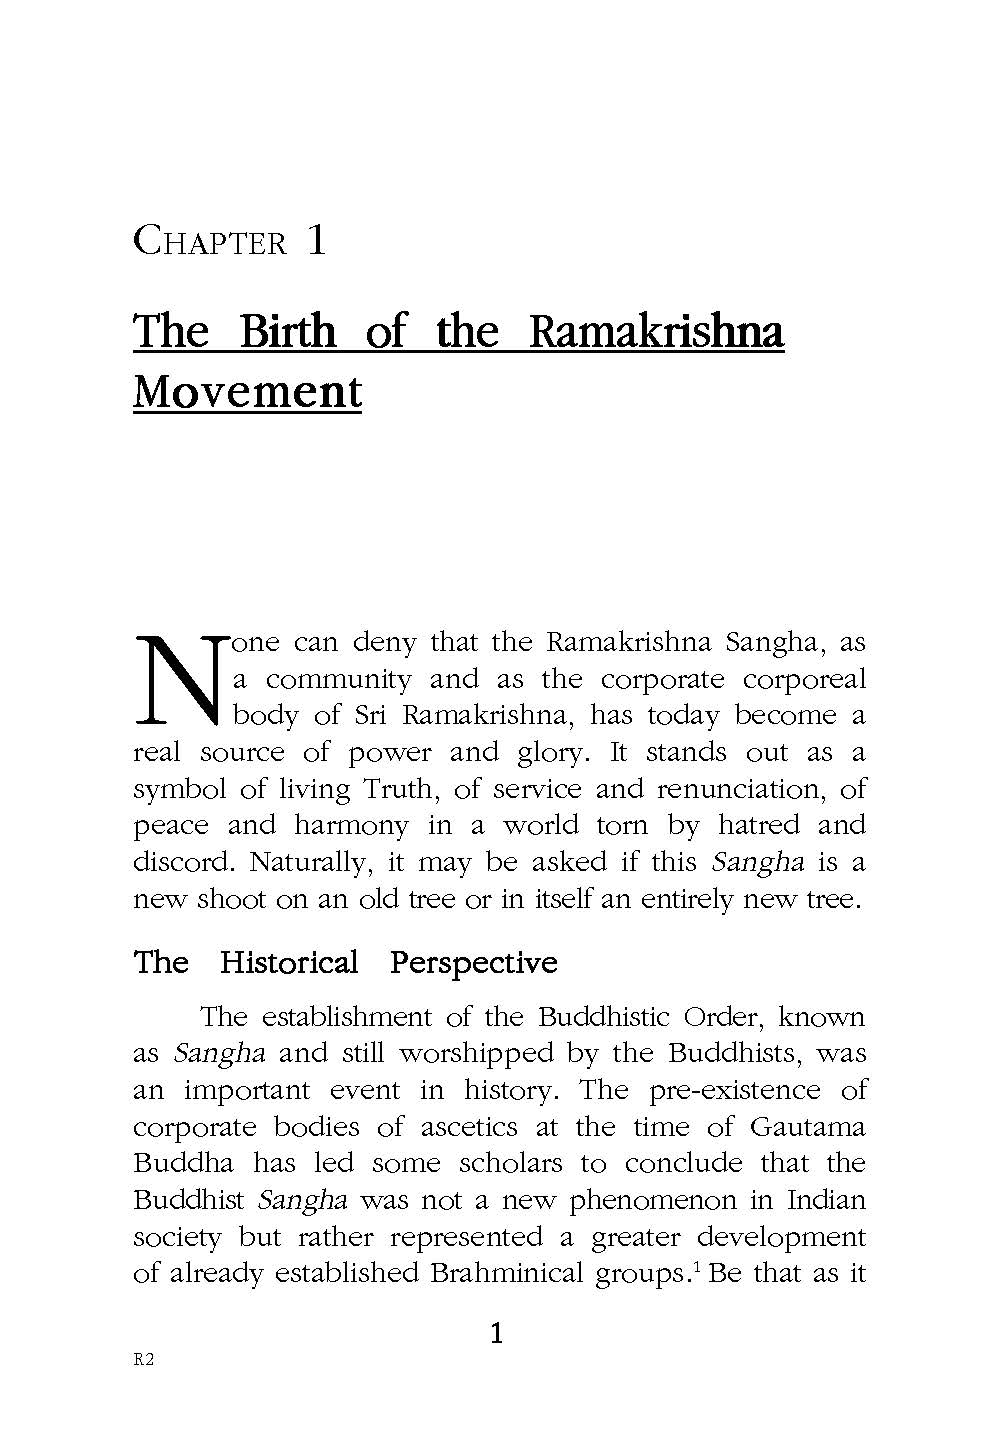 The Early History of the Ramakrishna Movement